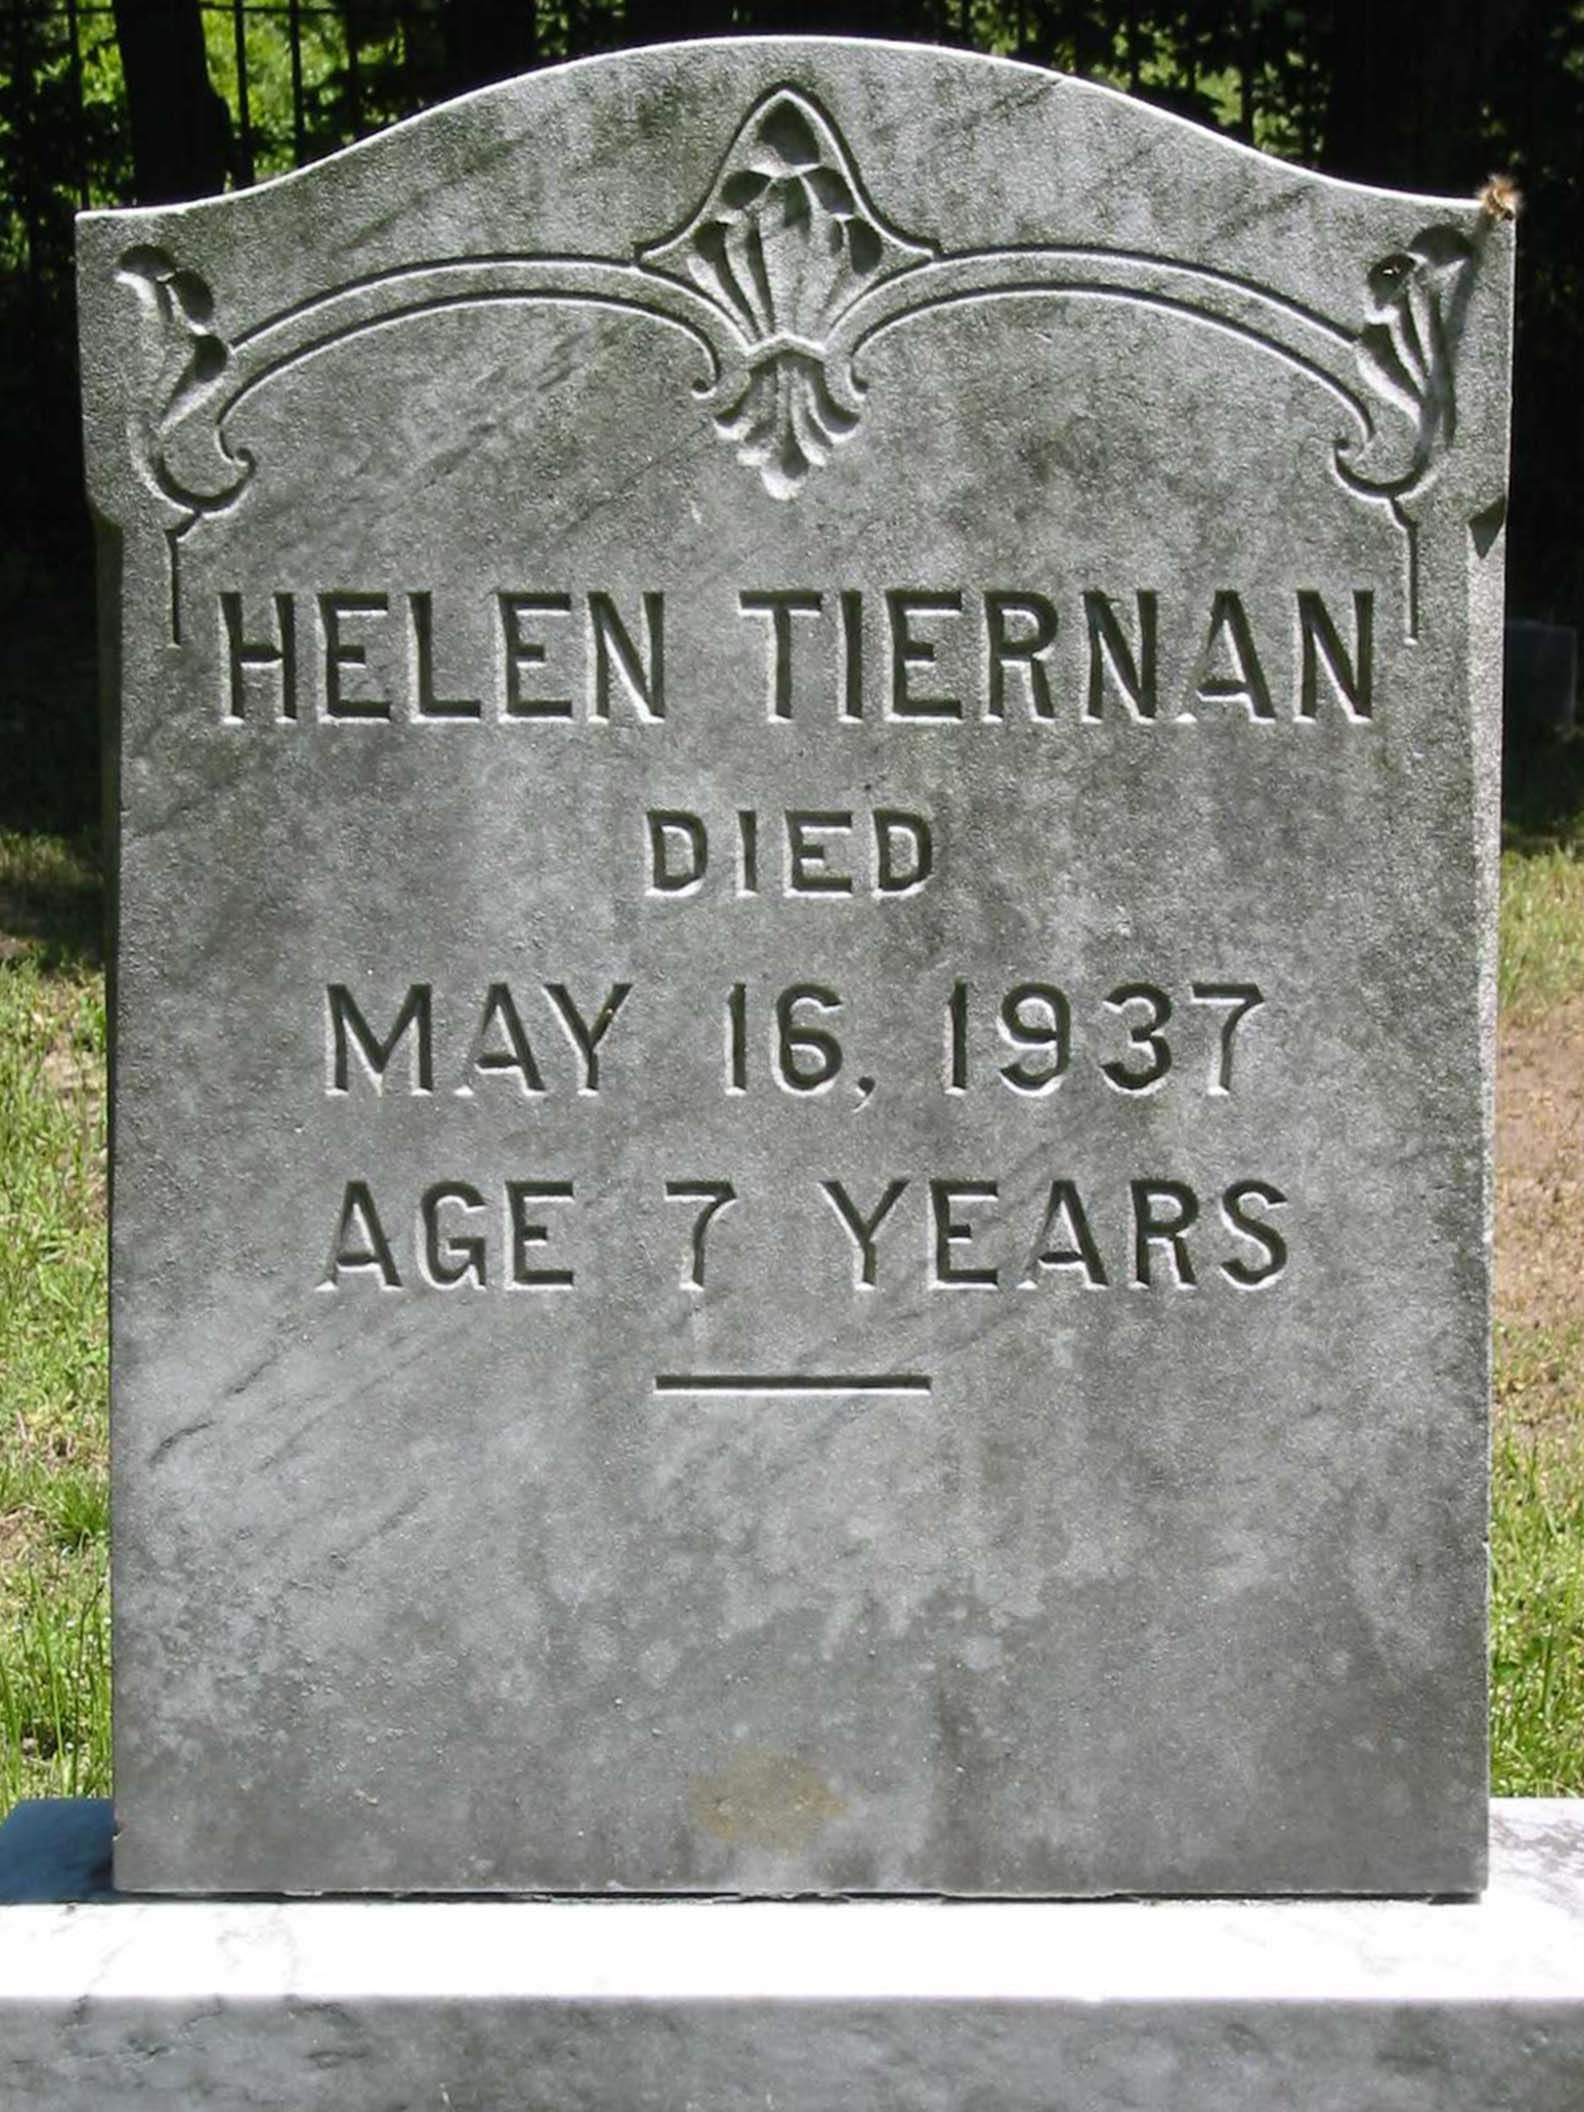 Helen Tiernan